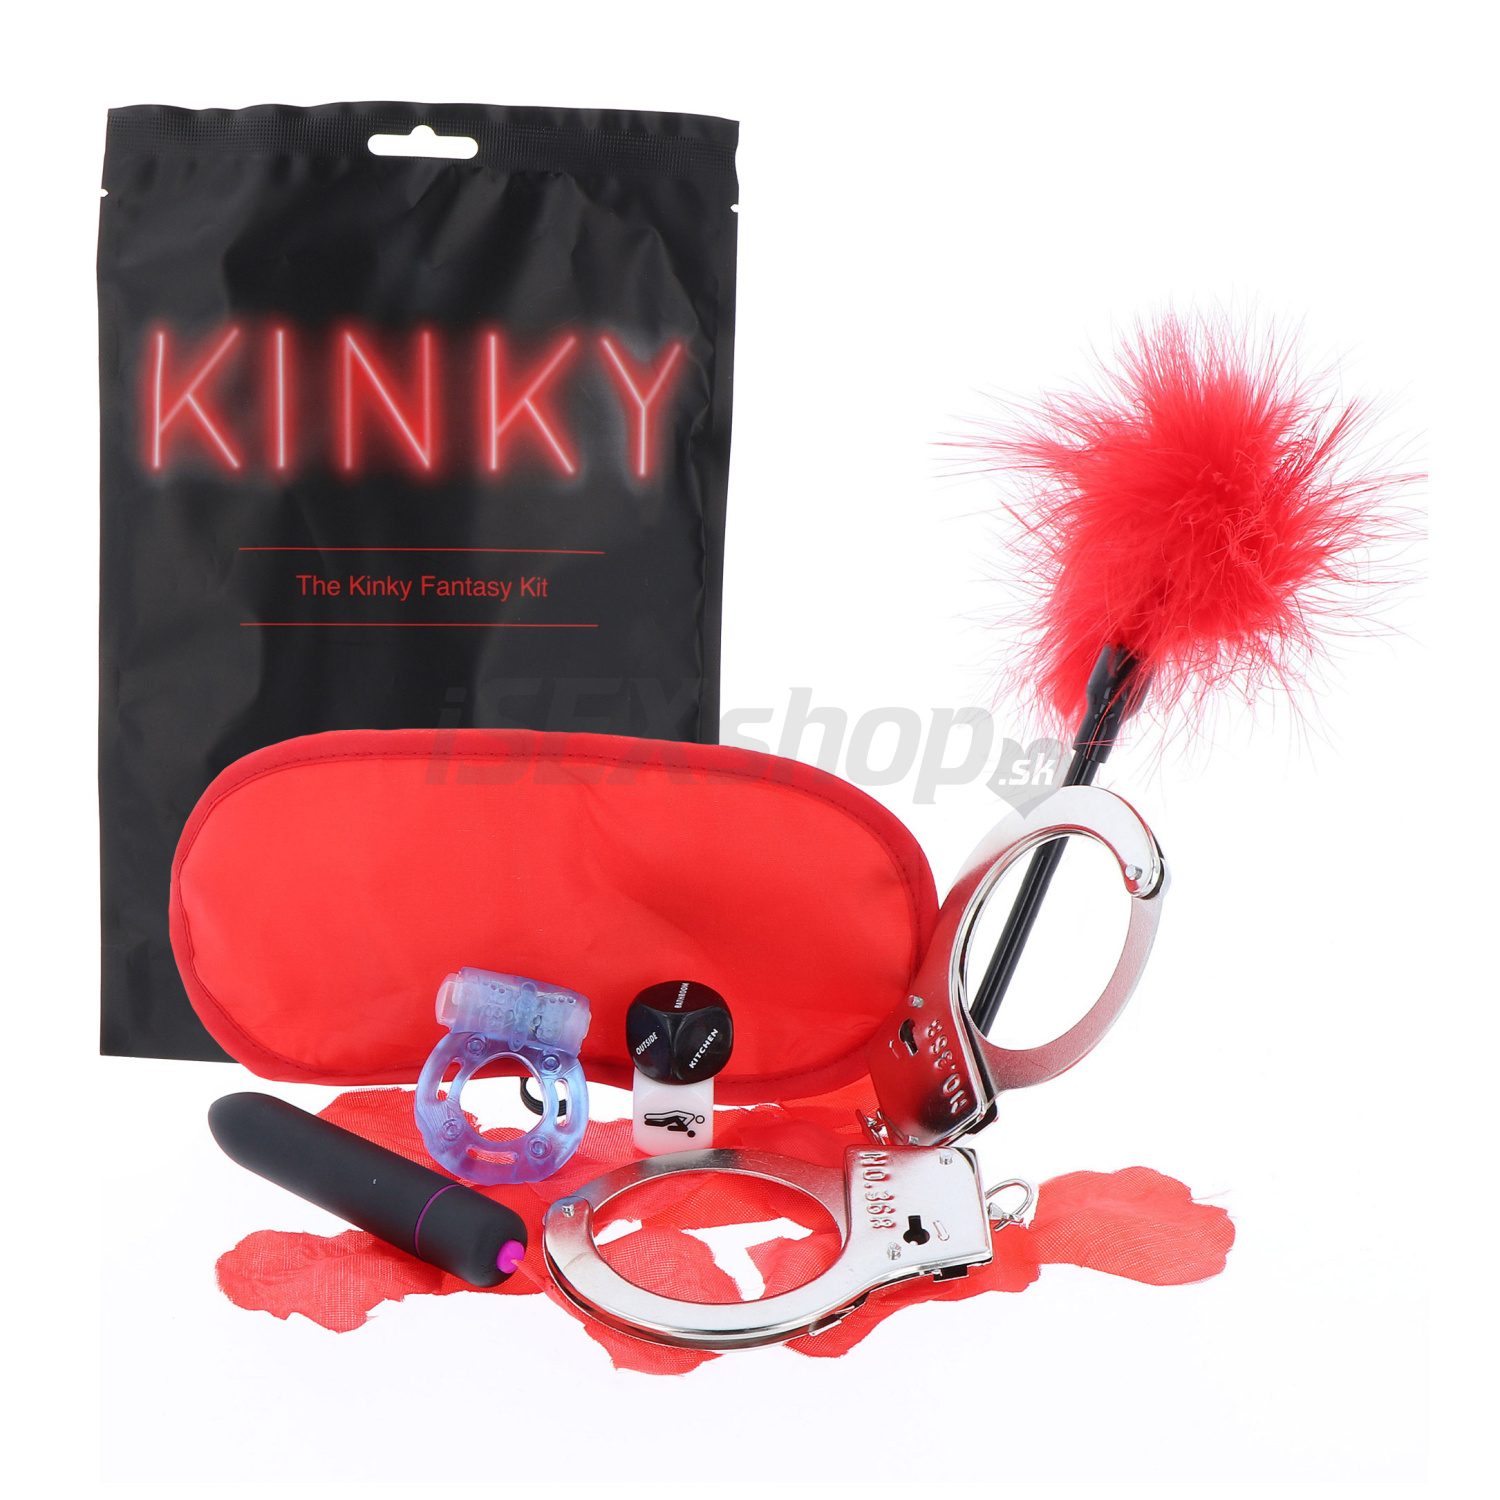 E-shop The Kinky Fantasy kit